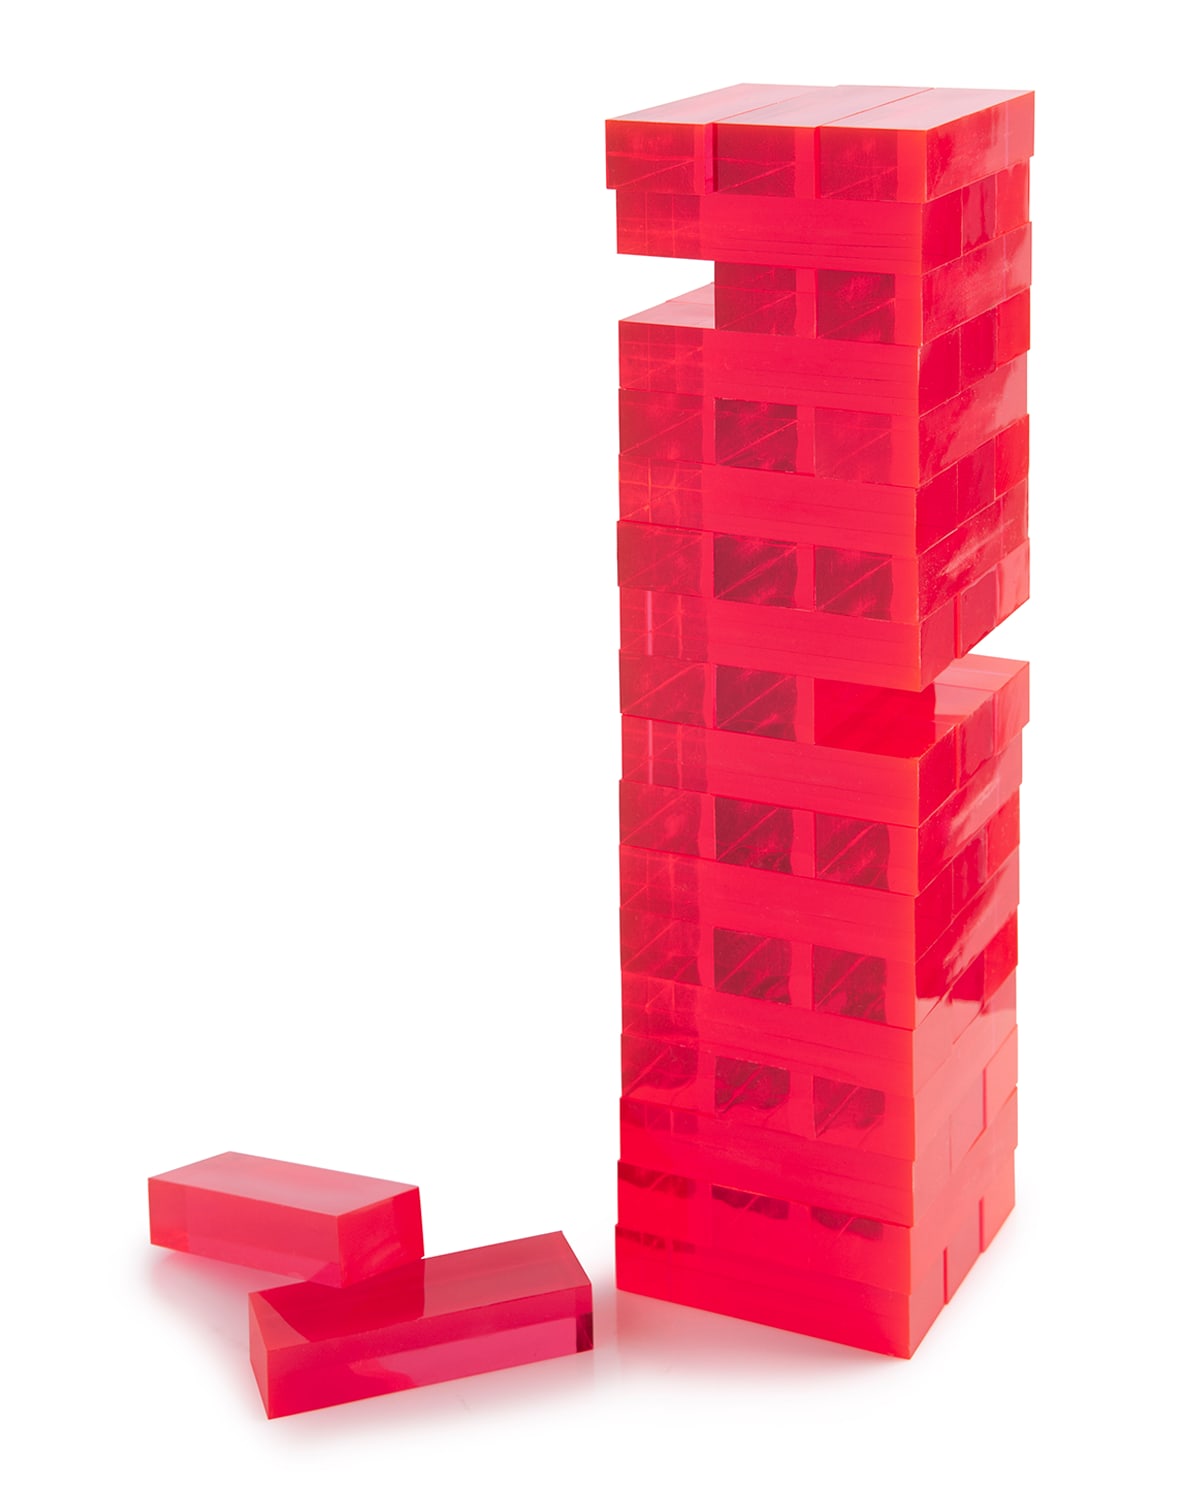 Aurosi Acrylic Tumble Tower Set In Red